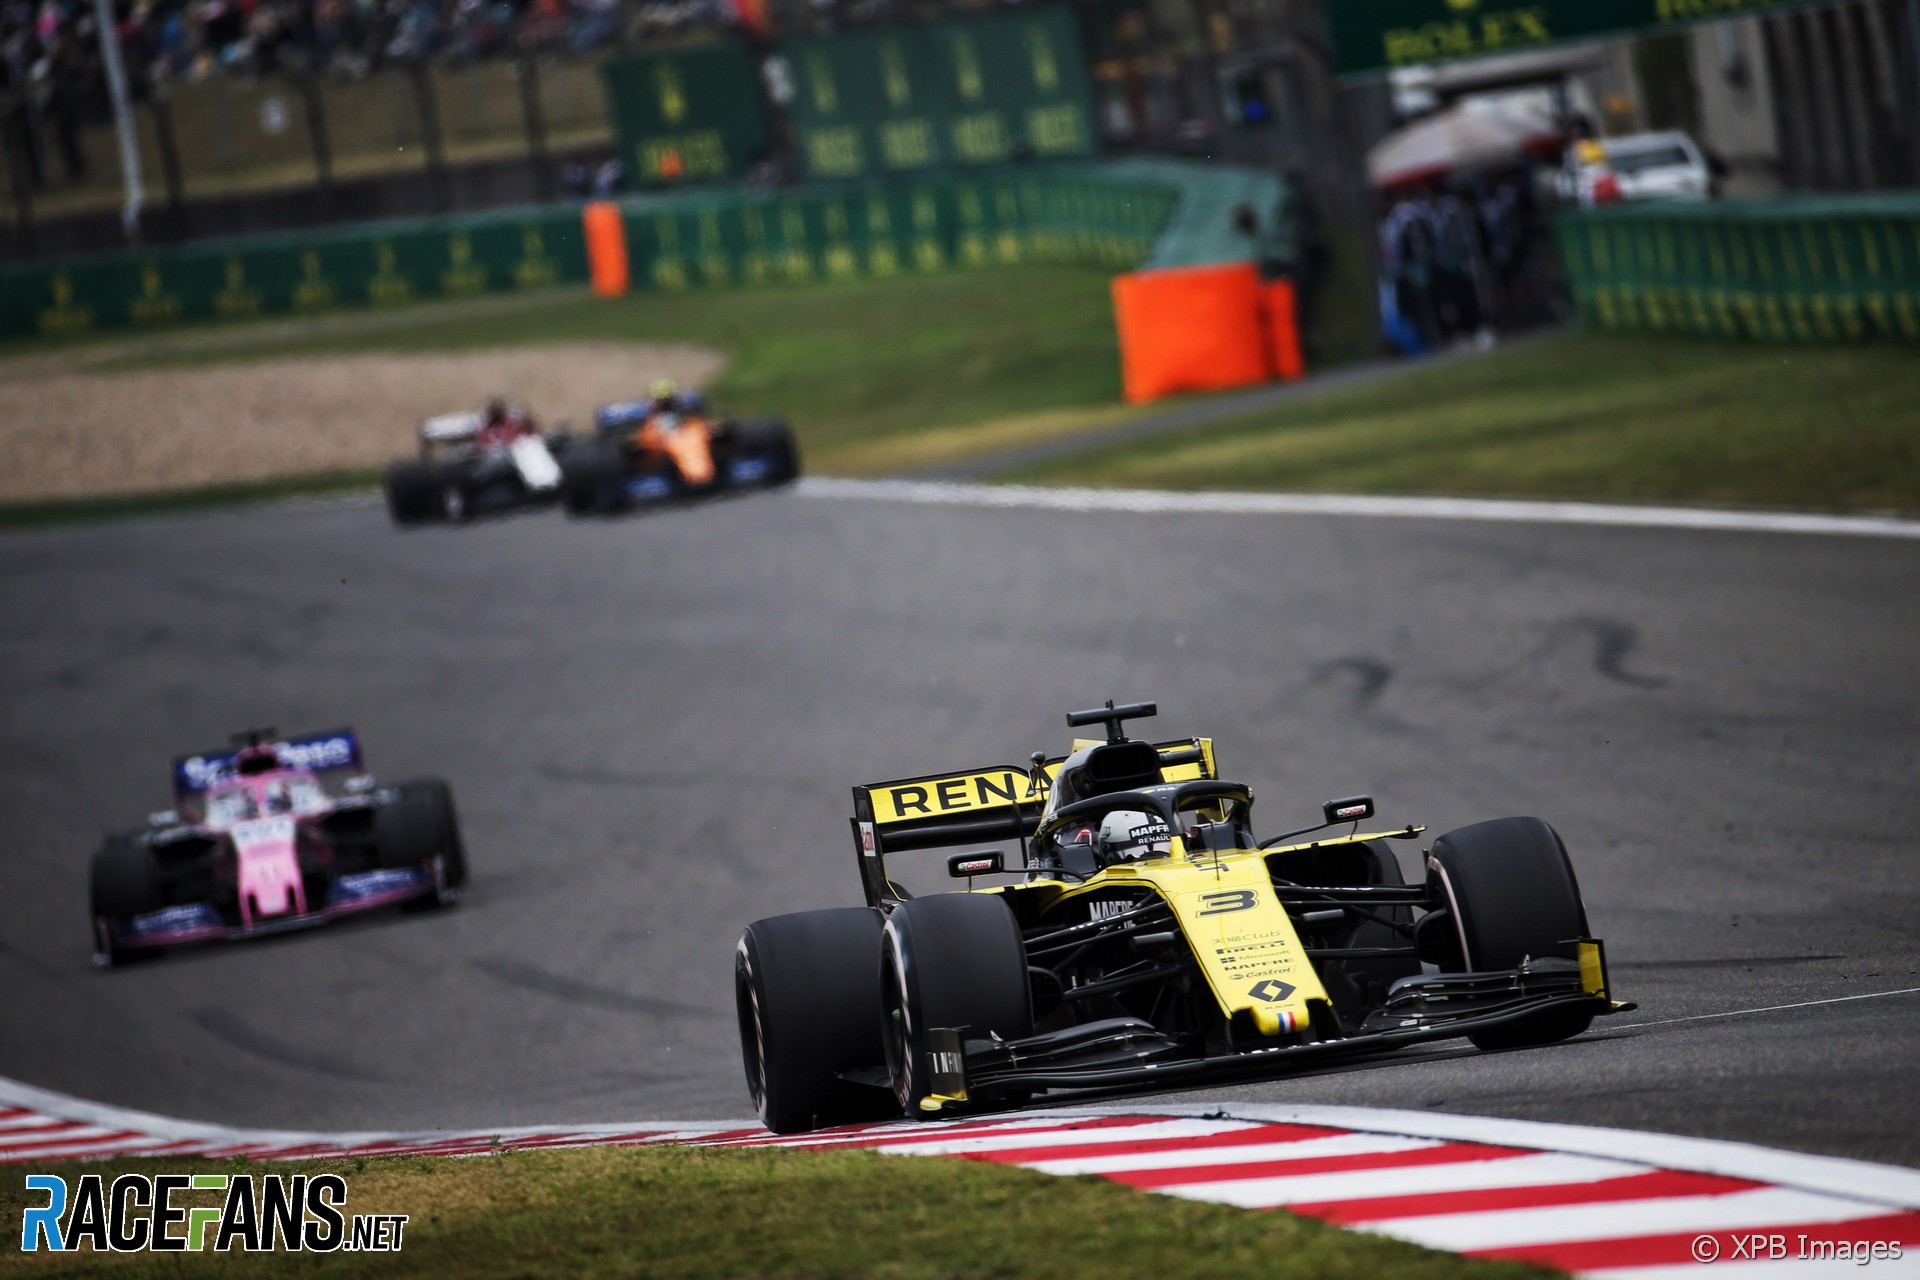 Daniel Ricciardo, Renault, Shanghai International Circuit, 2019